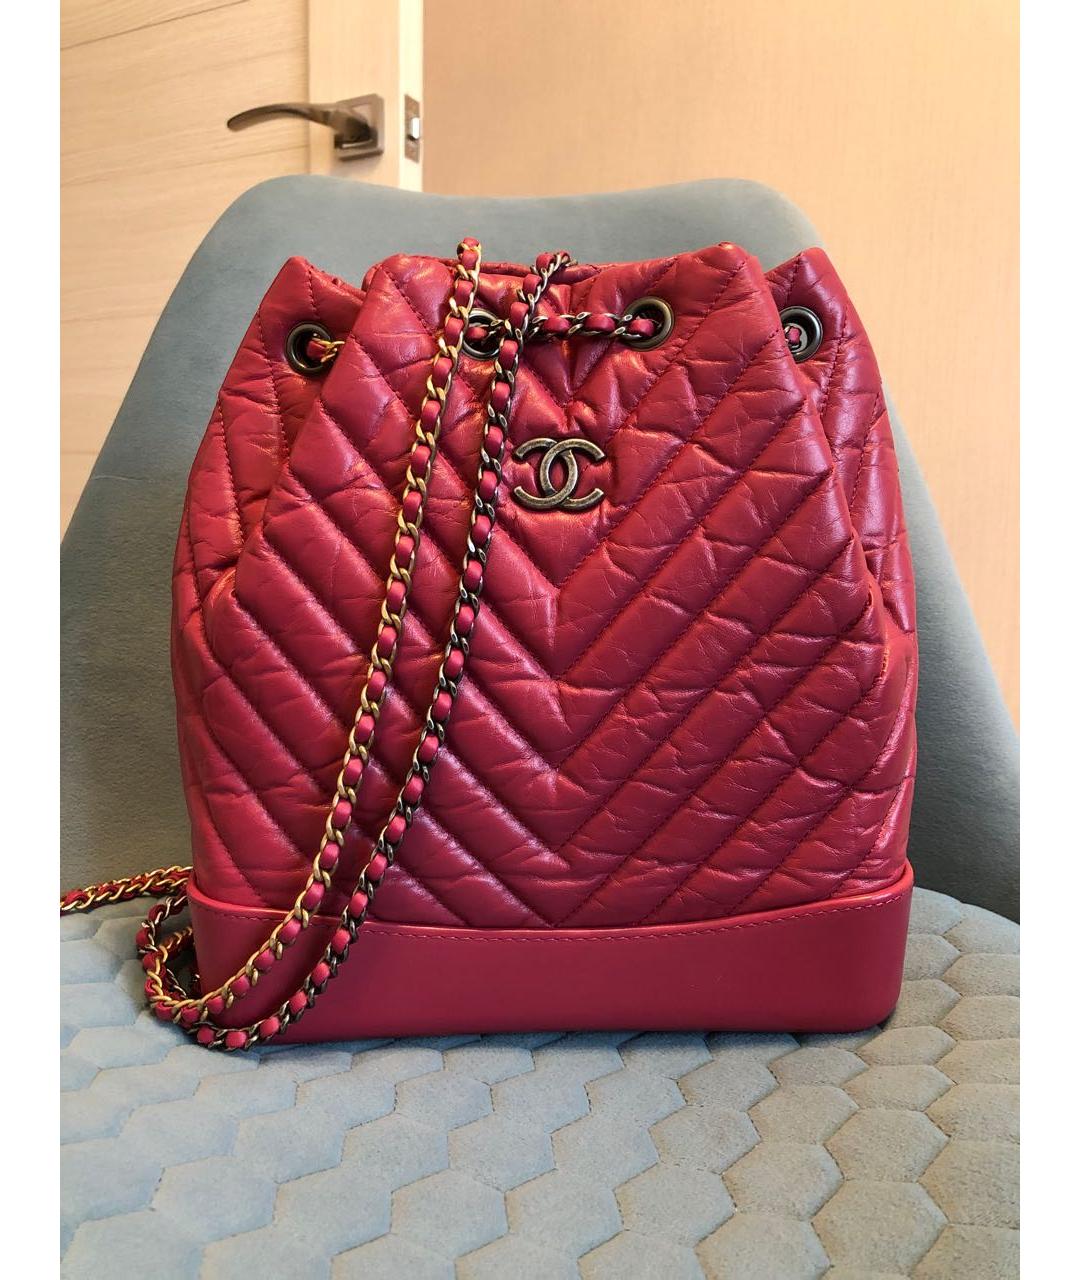 CHANEL PRE-OWNED Розовый кожаный рюкзак, фото 2